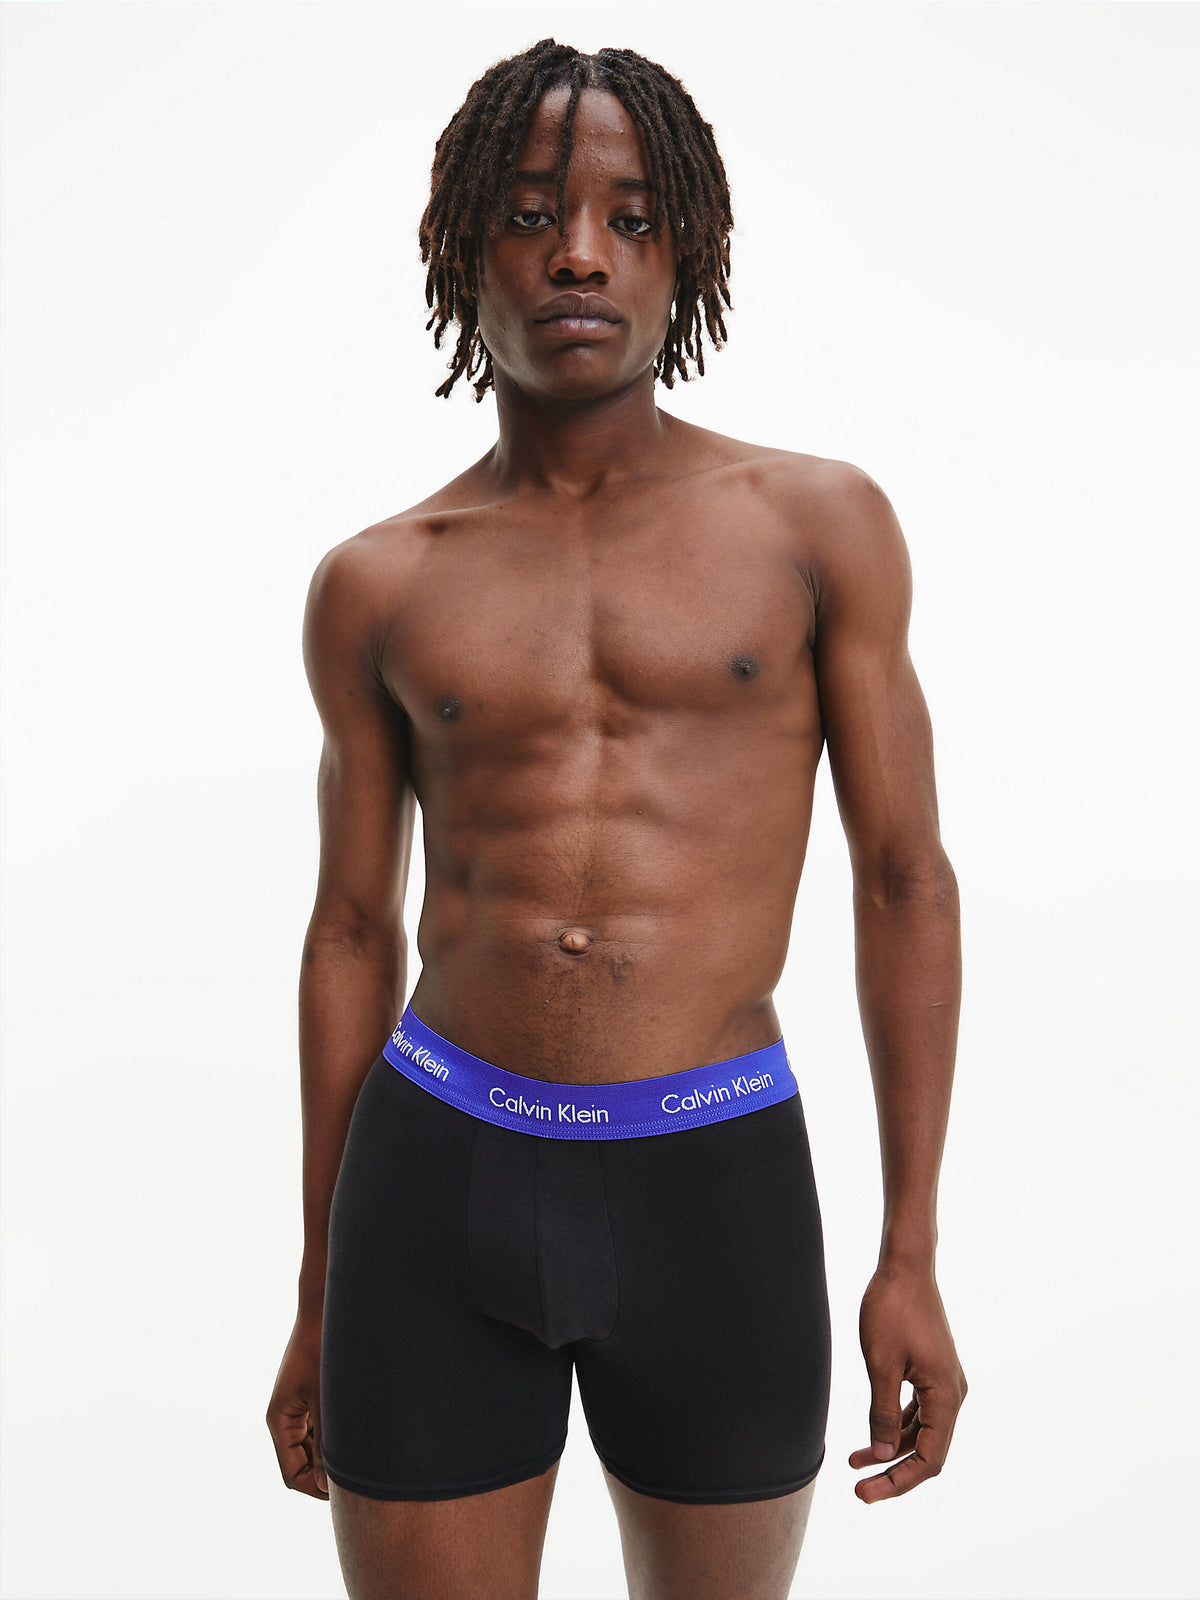 Calvin Klein Mens Boxer Briefs - Classic Fit (3-Pack), 02, Nb1770A, B-Shoreline/ Clem/ Travertine Wb